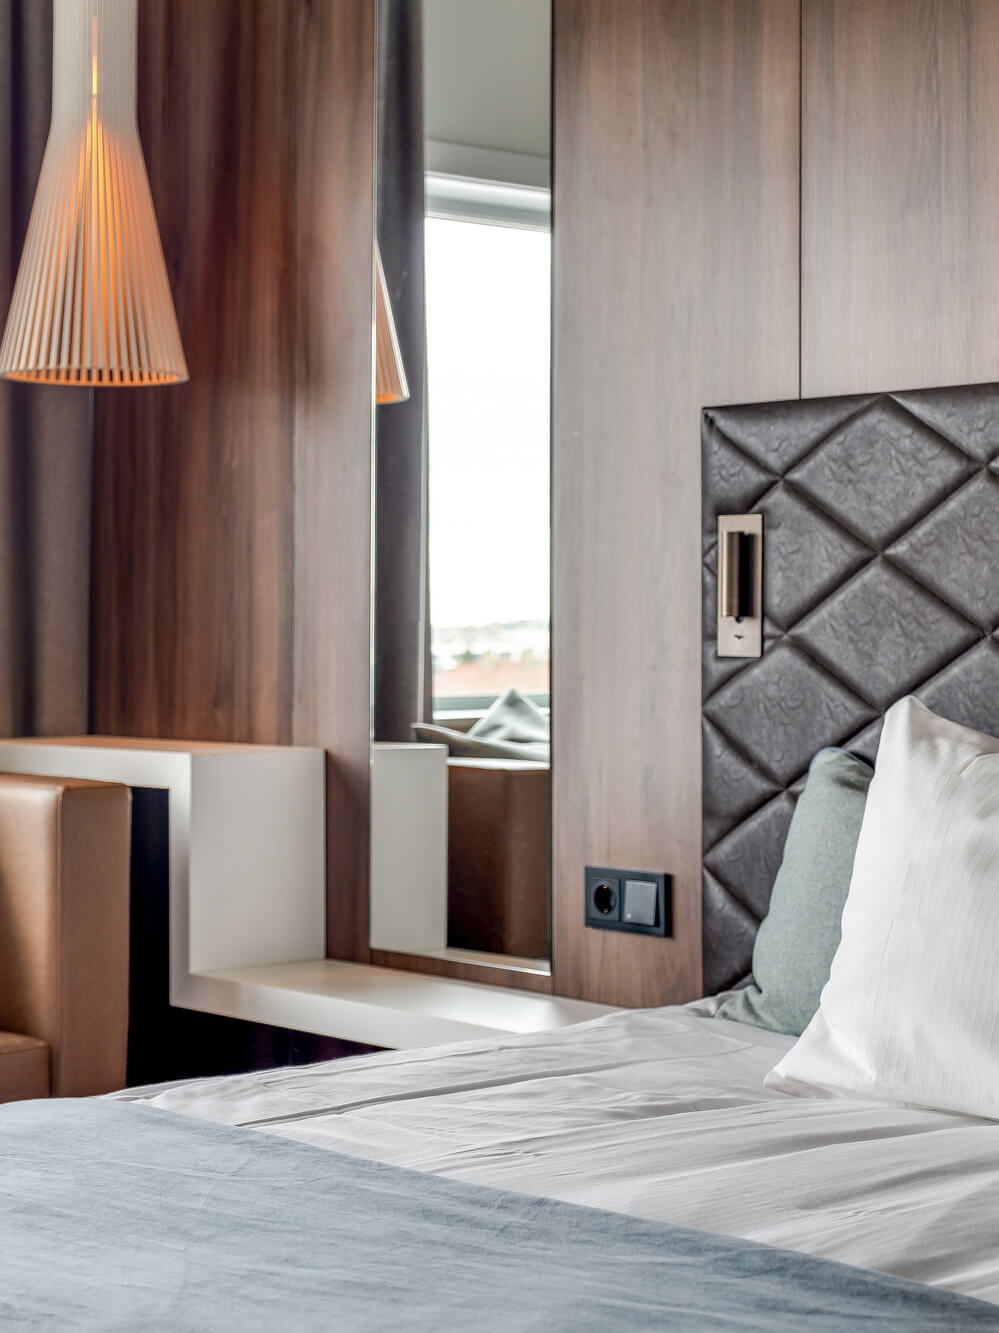 Bedroom details at Quality Airport Hotel Stavanger.